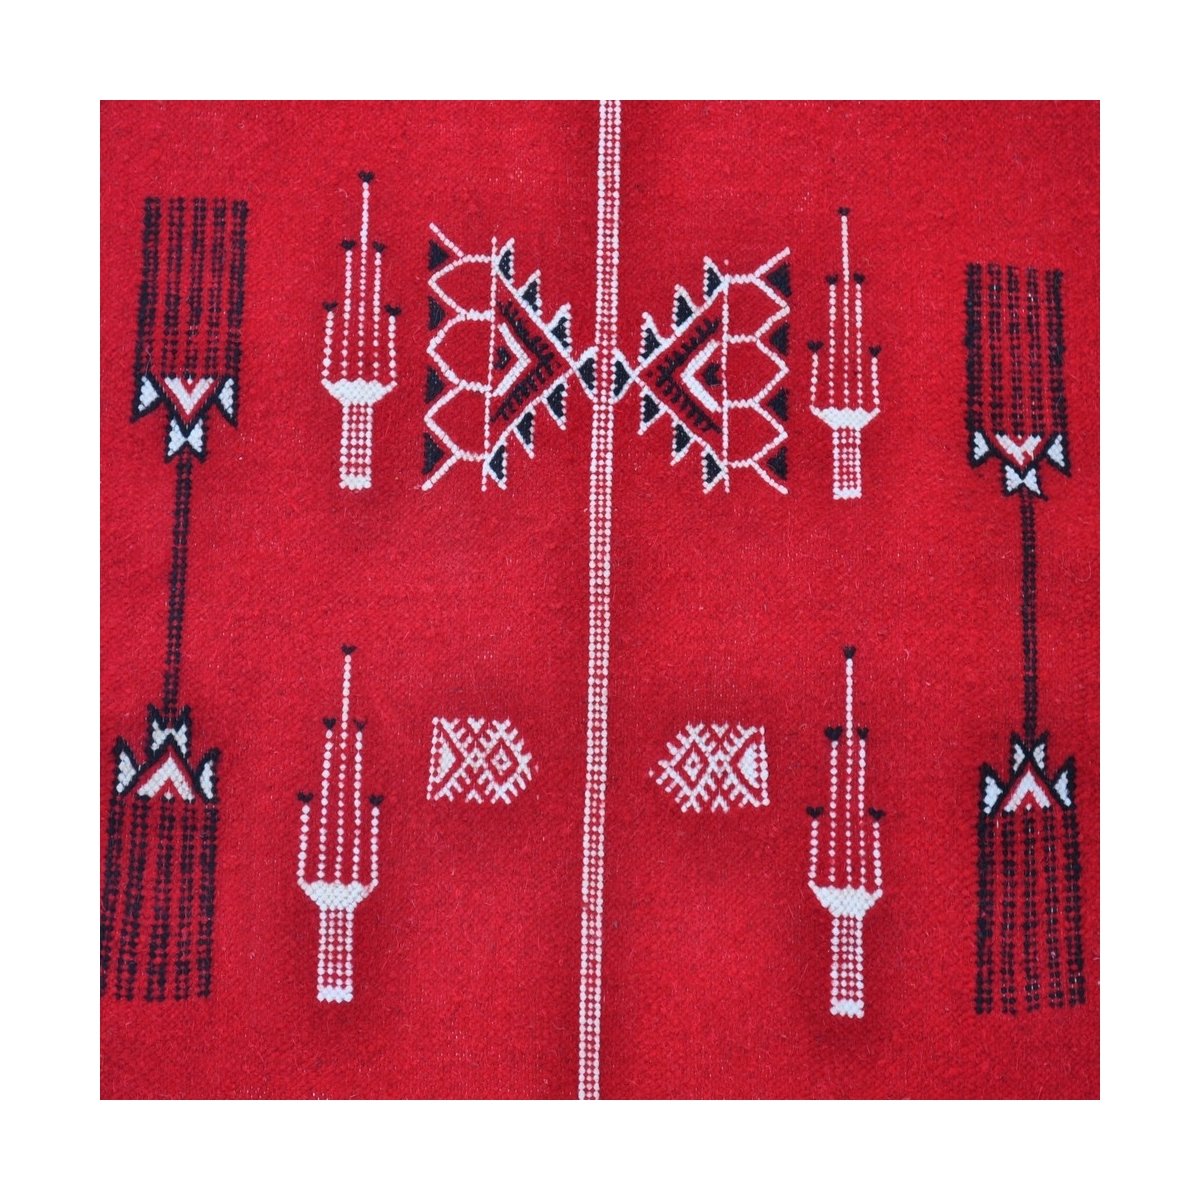 Berber tapijt Tapijt Kilim lang Tbolba 65x290 Rood (Handgeweven, Wol, Tunesië) Tunesisch kilimdeken, Marokkaanse stijl. Rechthoe